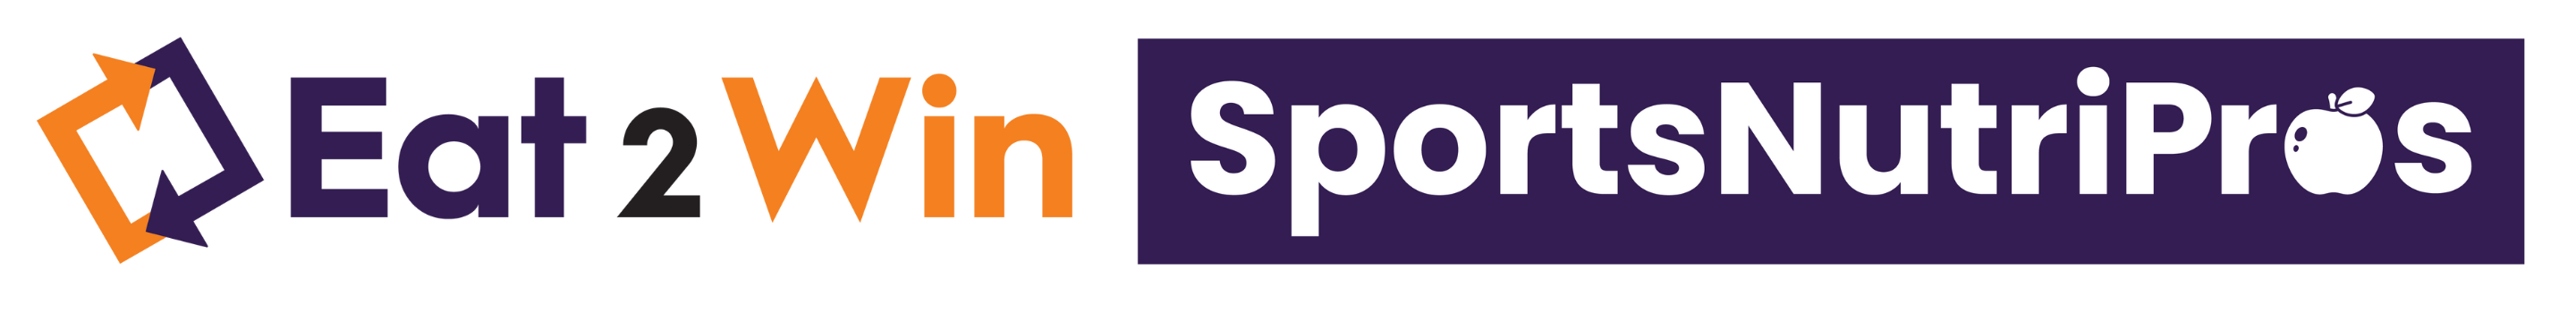 SportsNutriPros Horizontal Logo